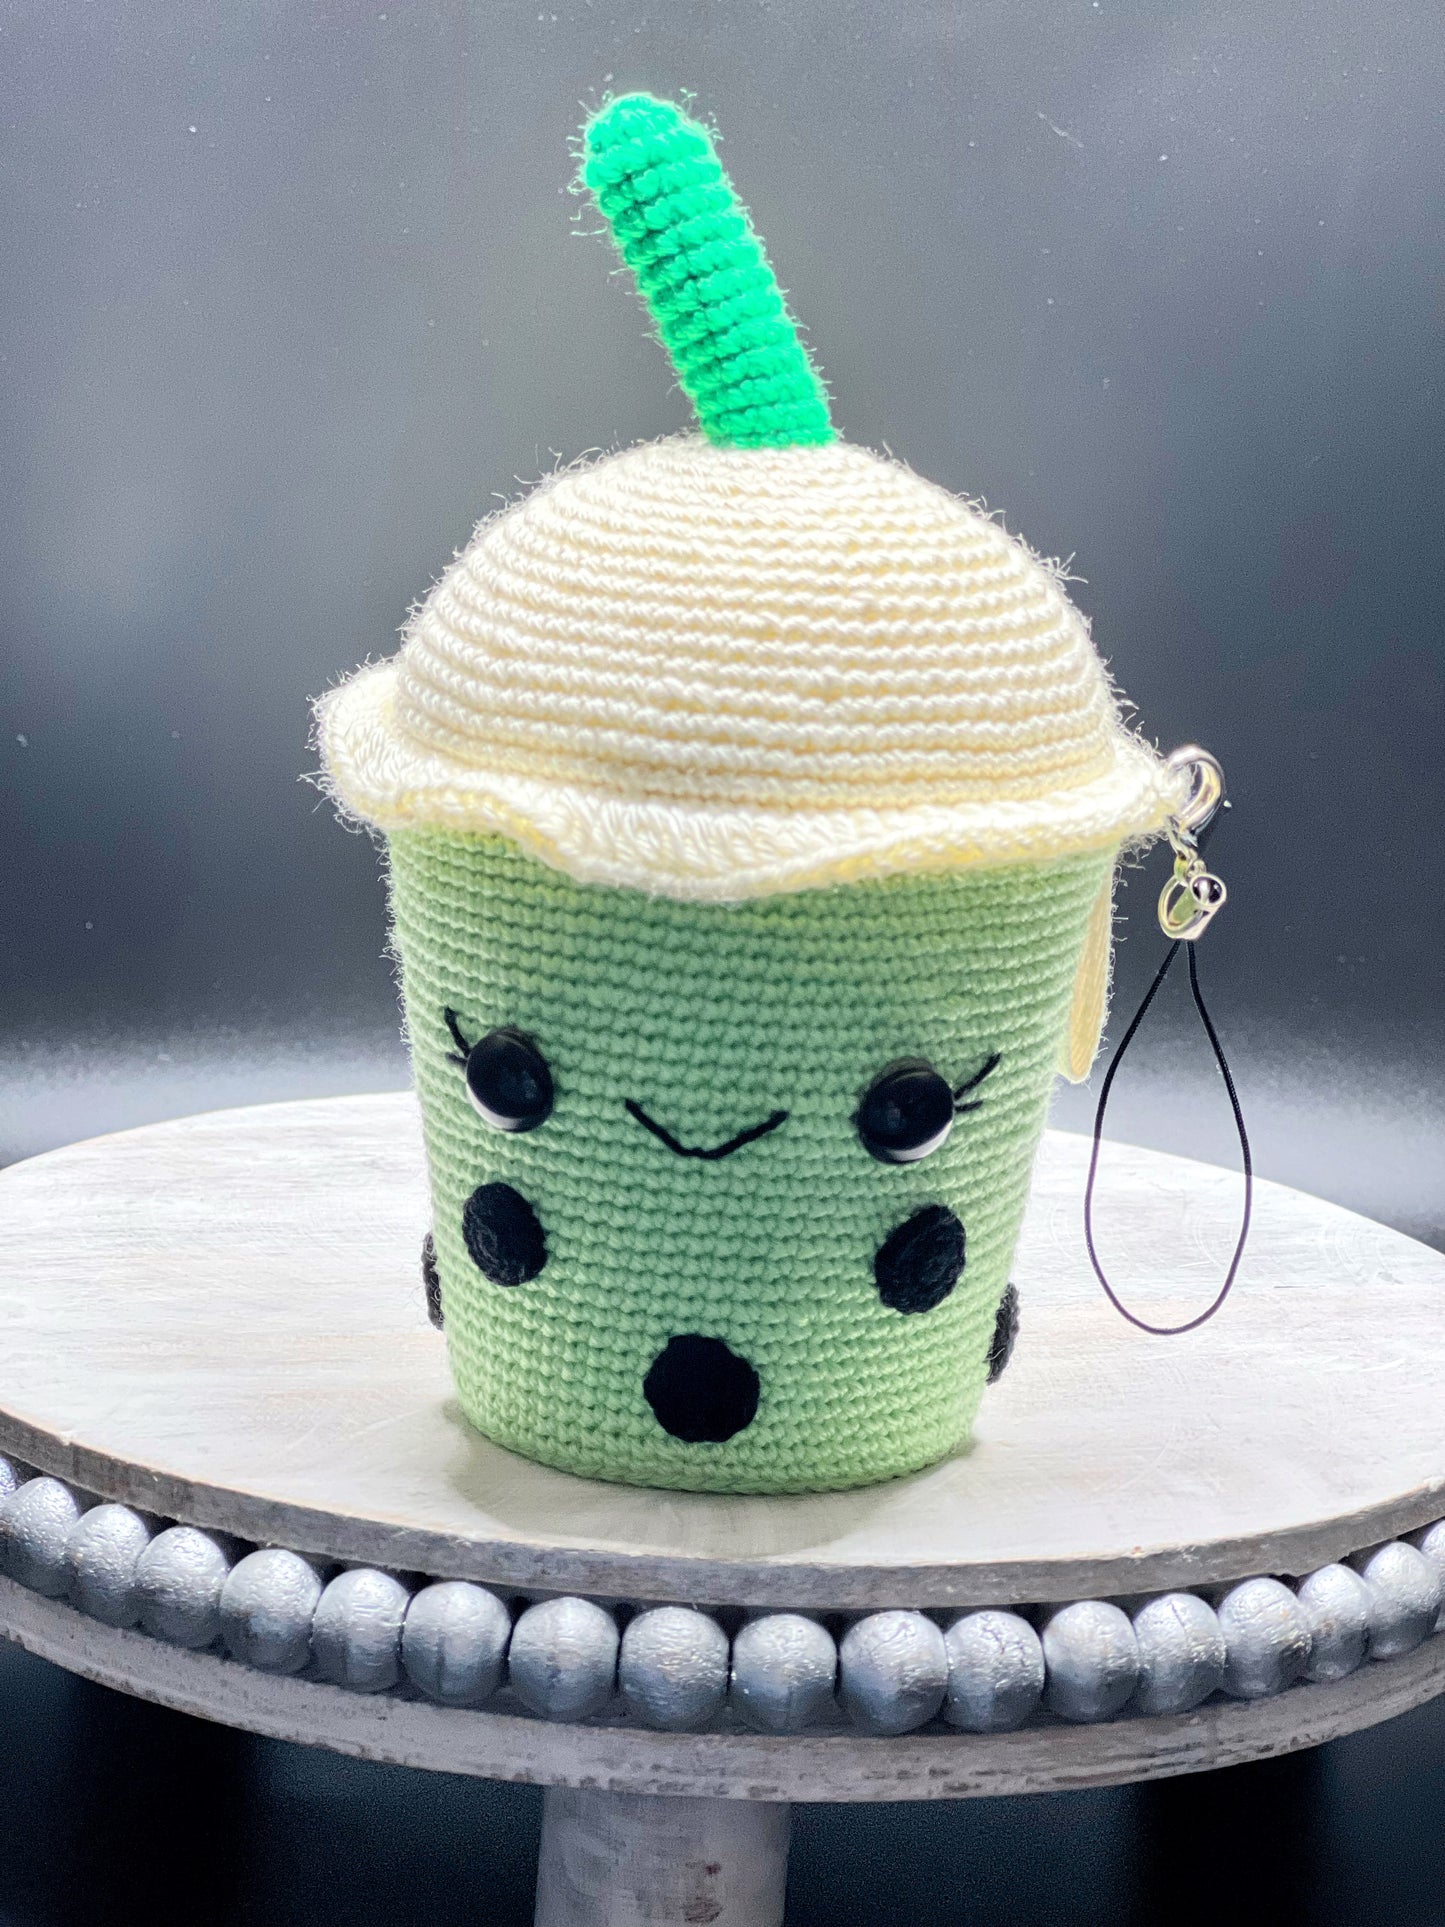 Stuffed Boba Drink Toy - Crochet Knitted Amigurumi Toy